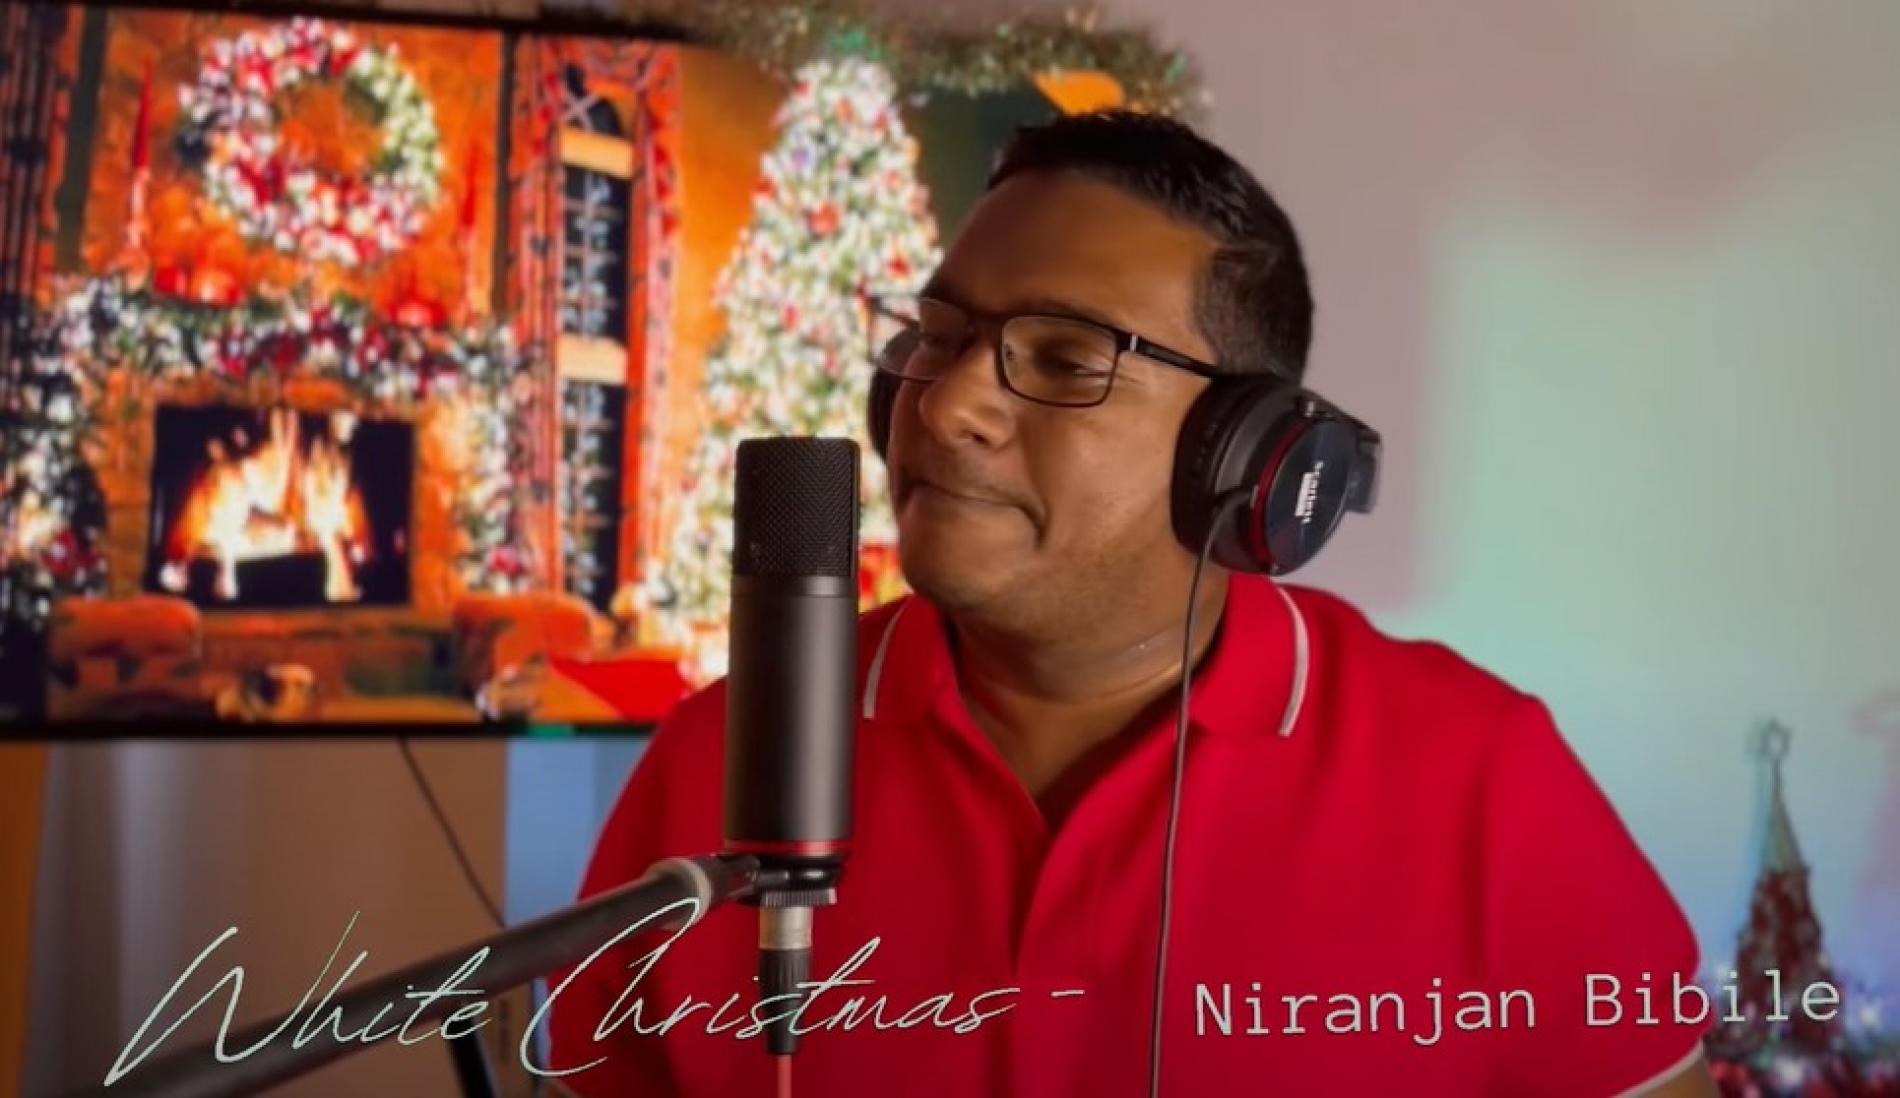 New Music : White Christmas (cover ) Niranjan Bibile